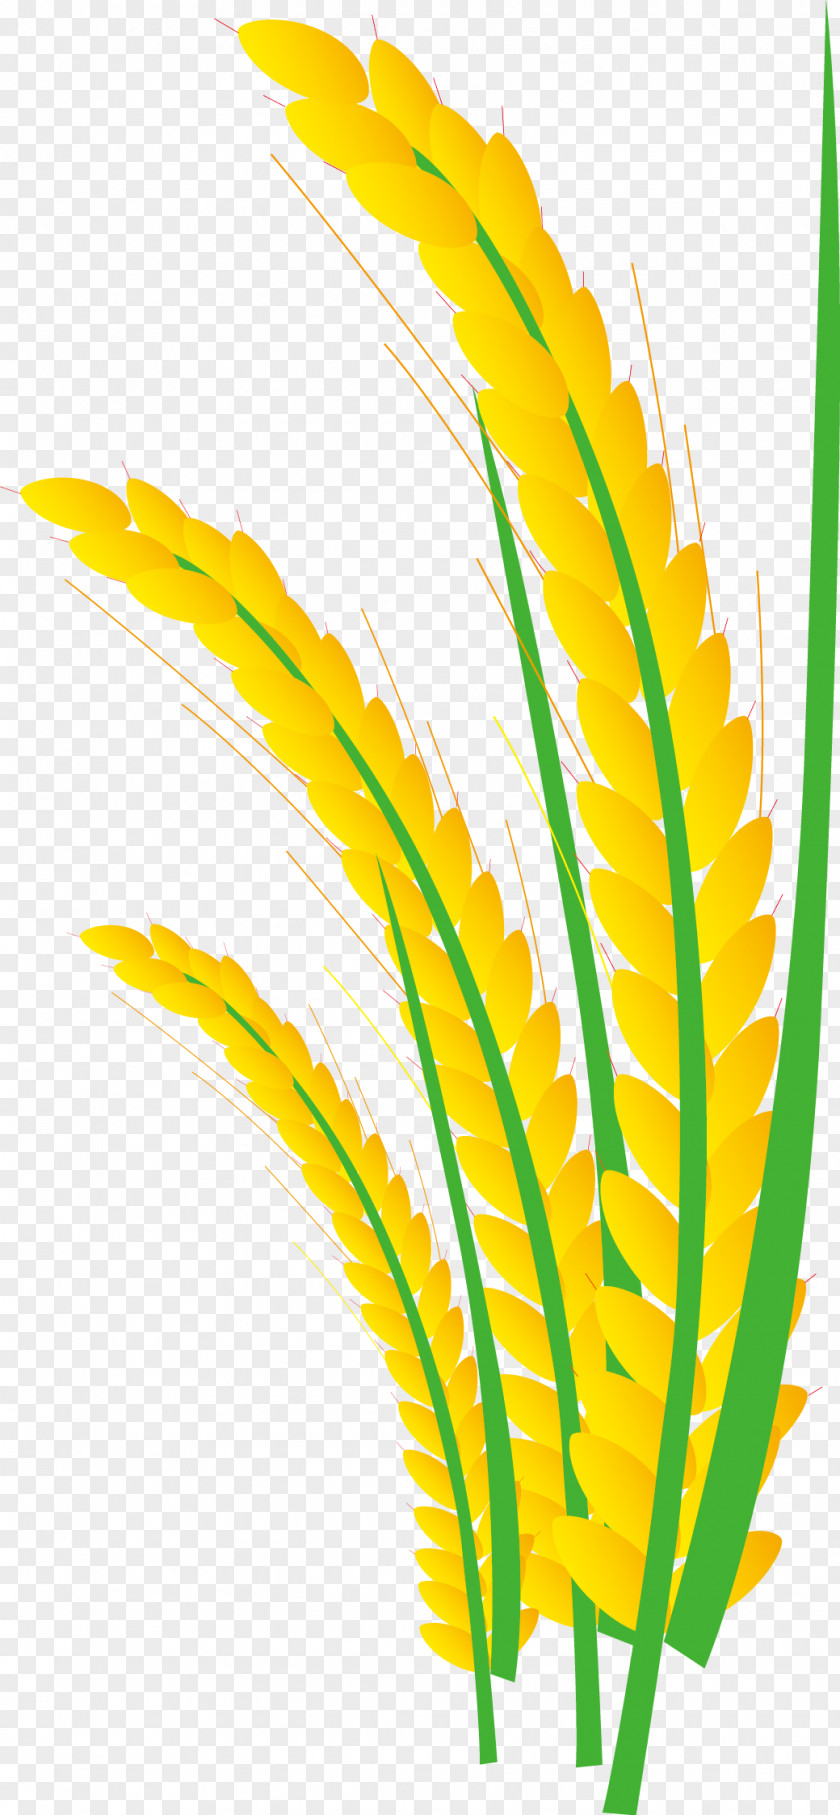 Paddy,Rice,Rice,Hedao,Rice Rice Gadu Paddy Field Gratis PNG